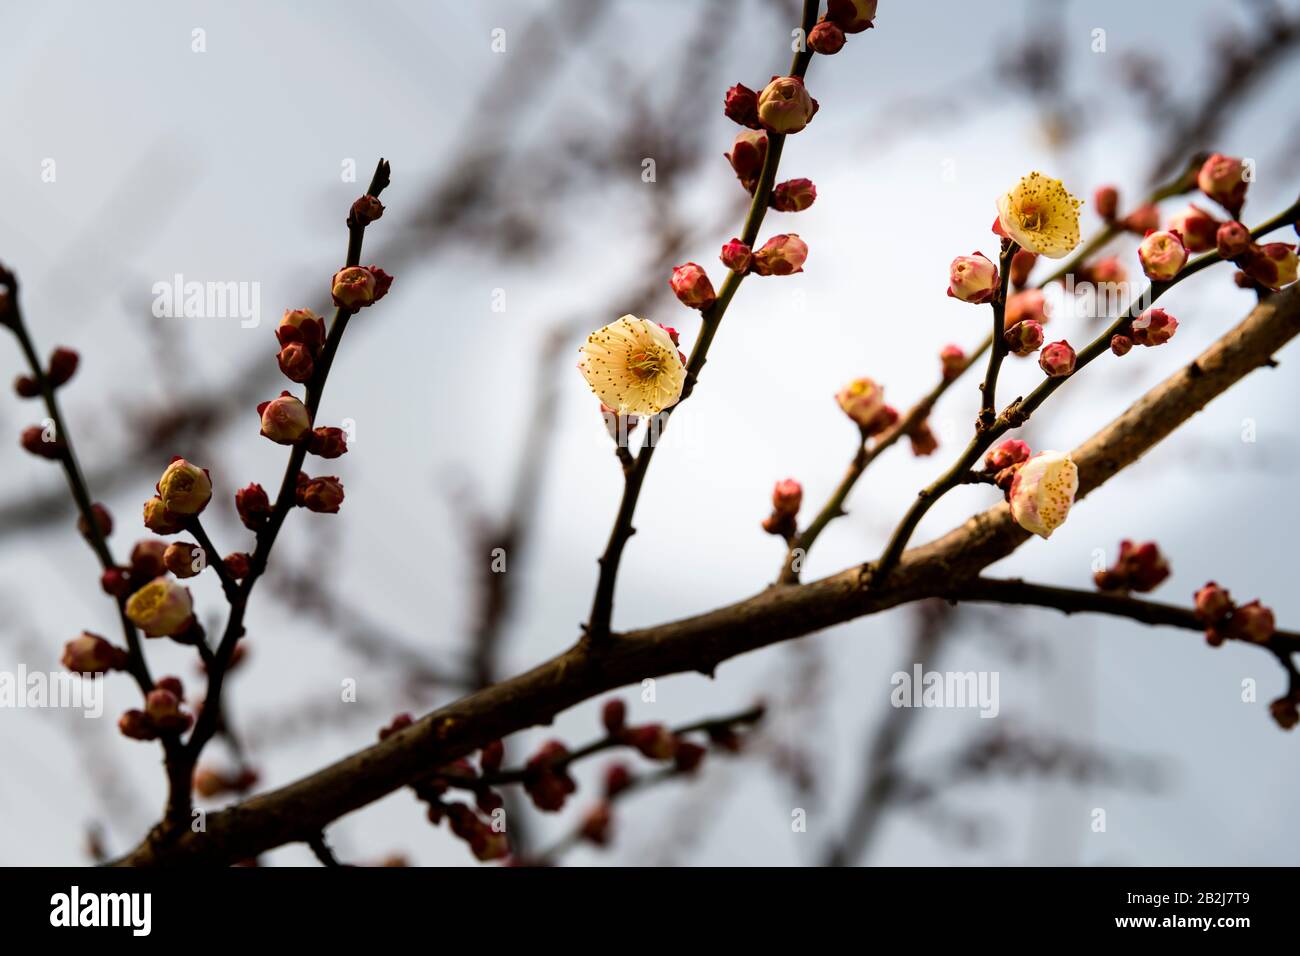 Wintersweet flower, Chimonanthus praecox, at Zhenlu Park in Shanghai, China. It blooms in the winter. Stock Photo